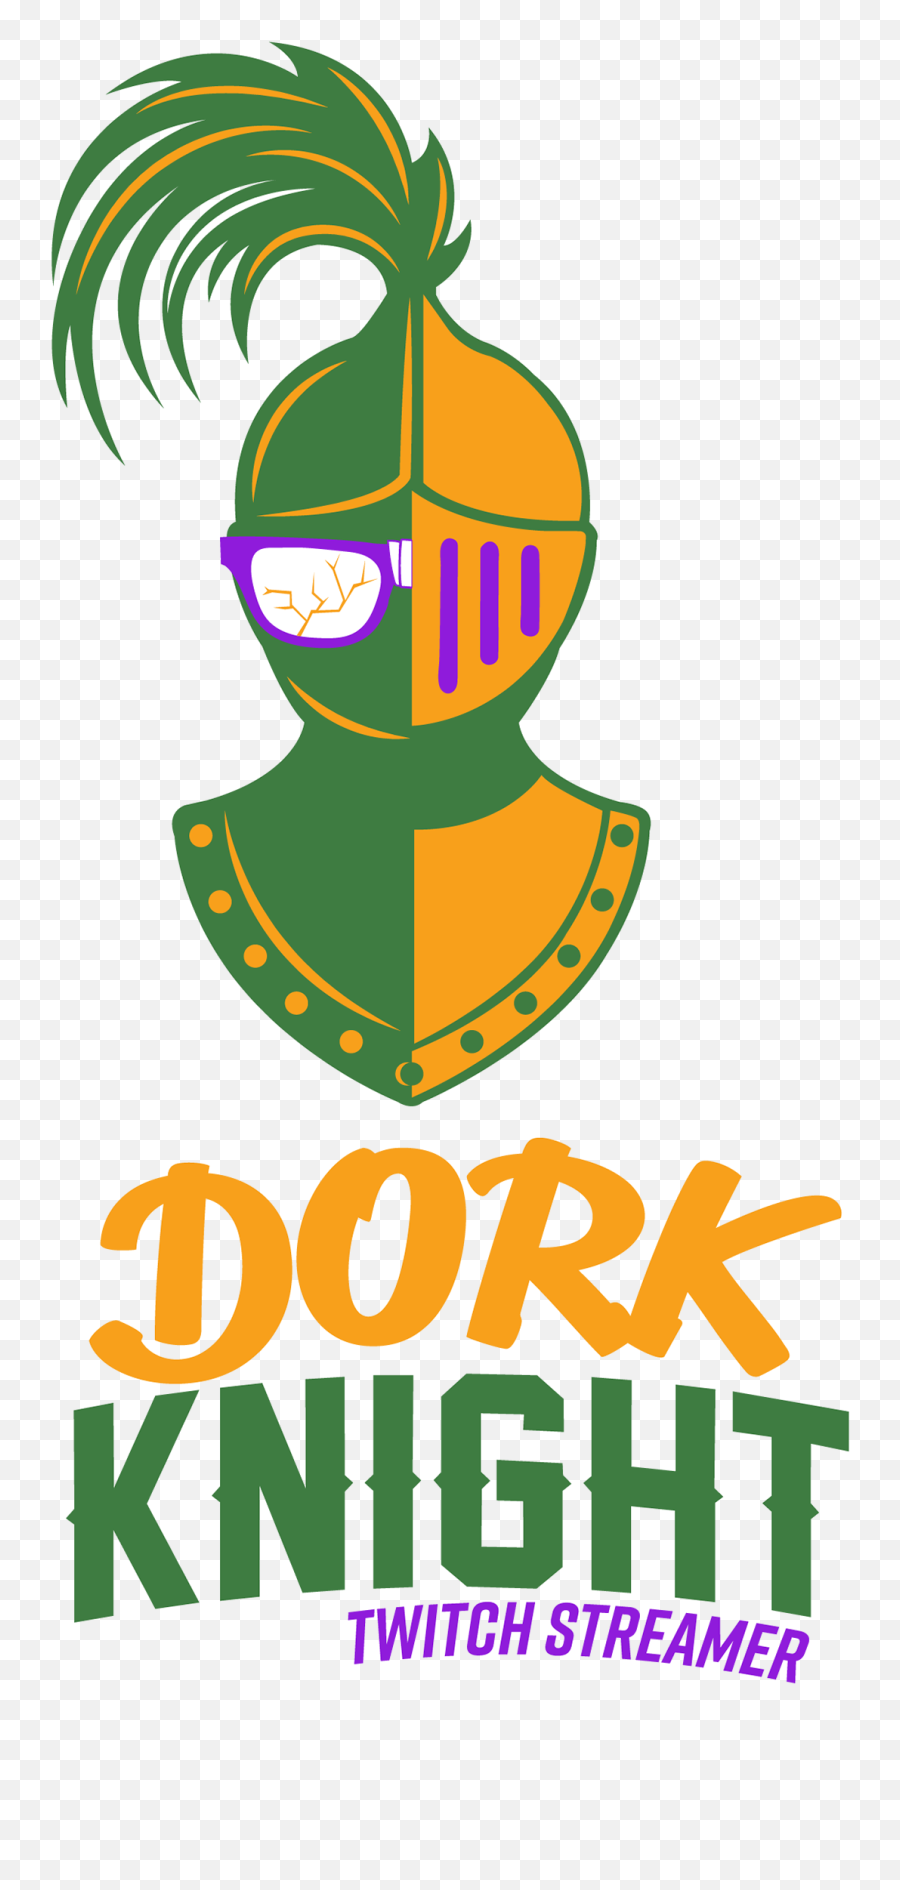 Dork Knight Twitch Streamer Portfolio - Language Emoji,Twitch Streamer Logos